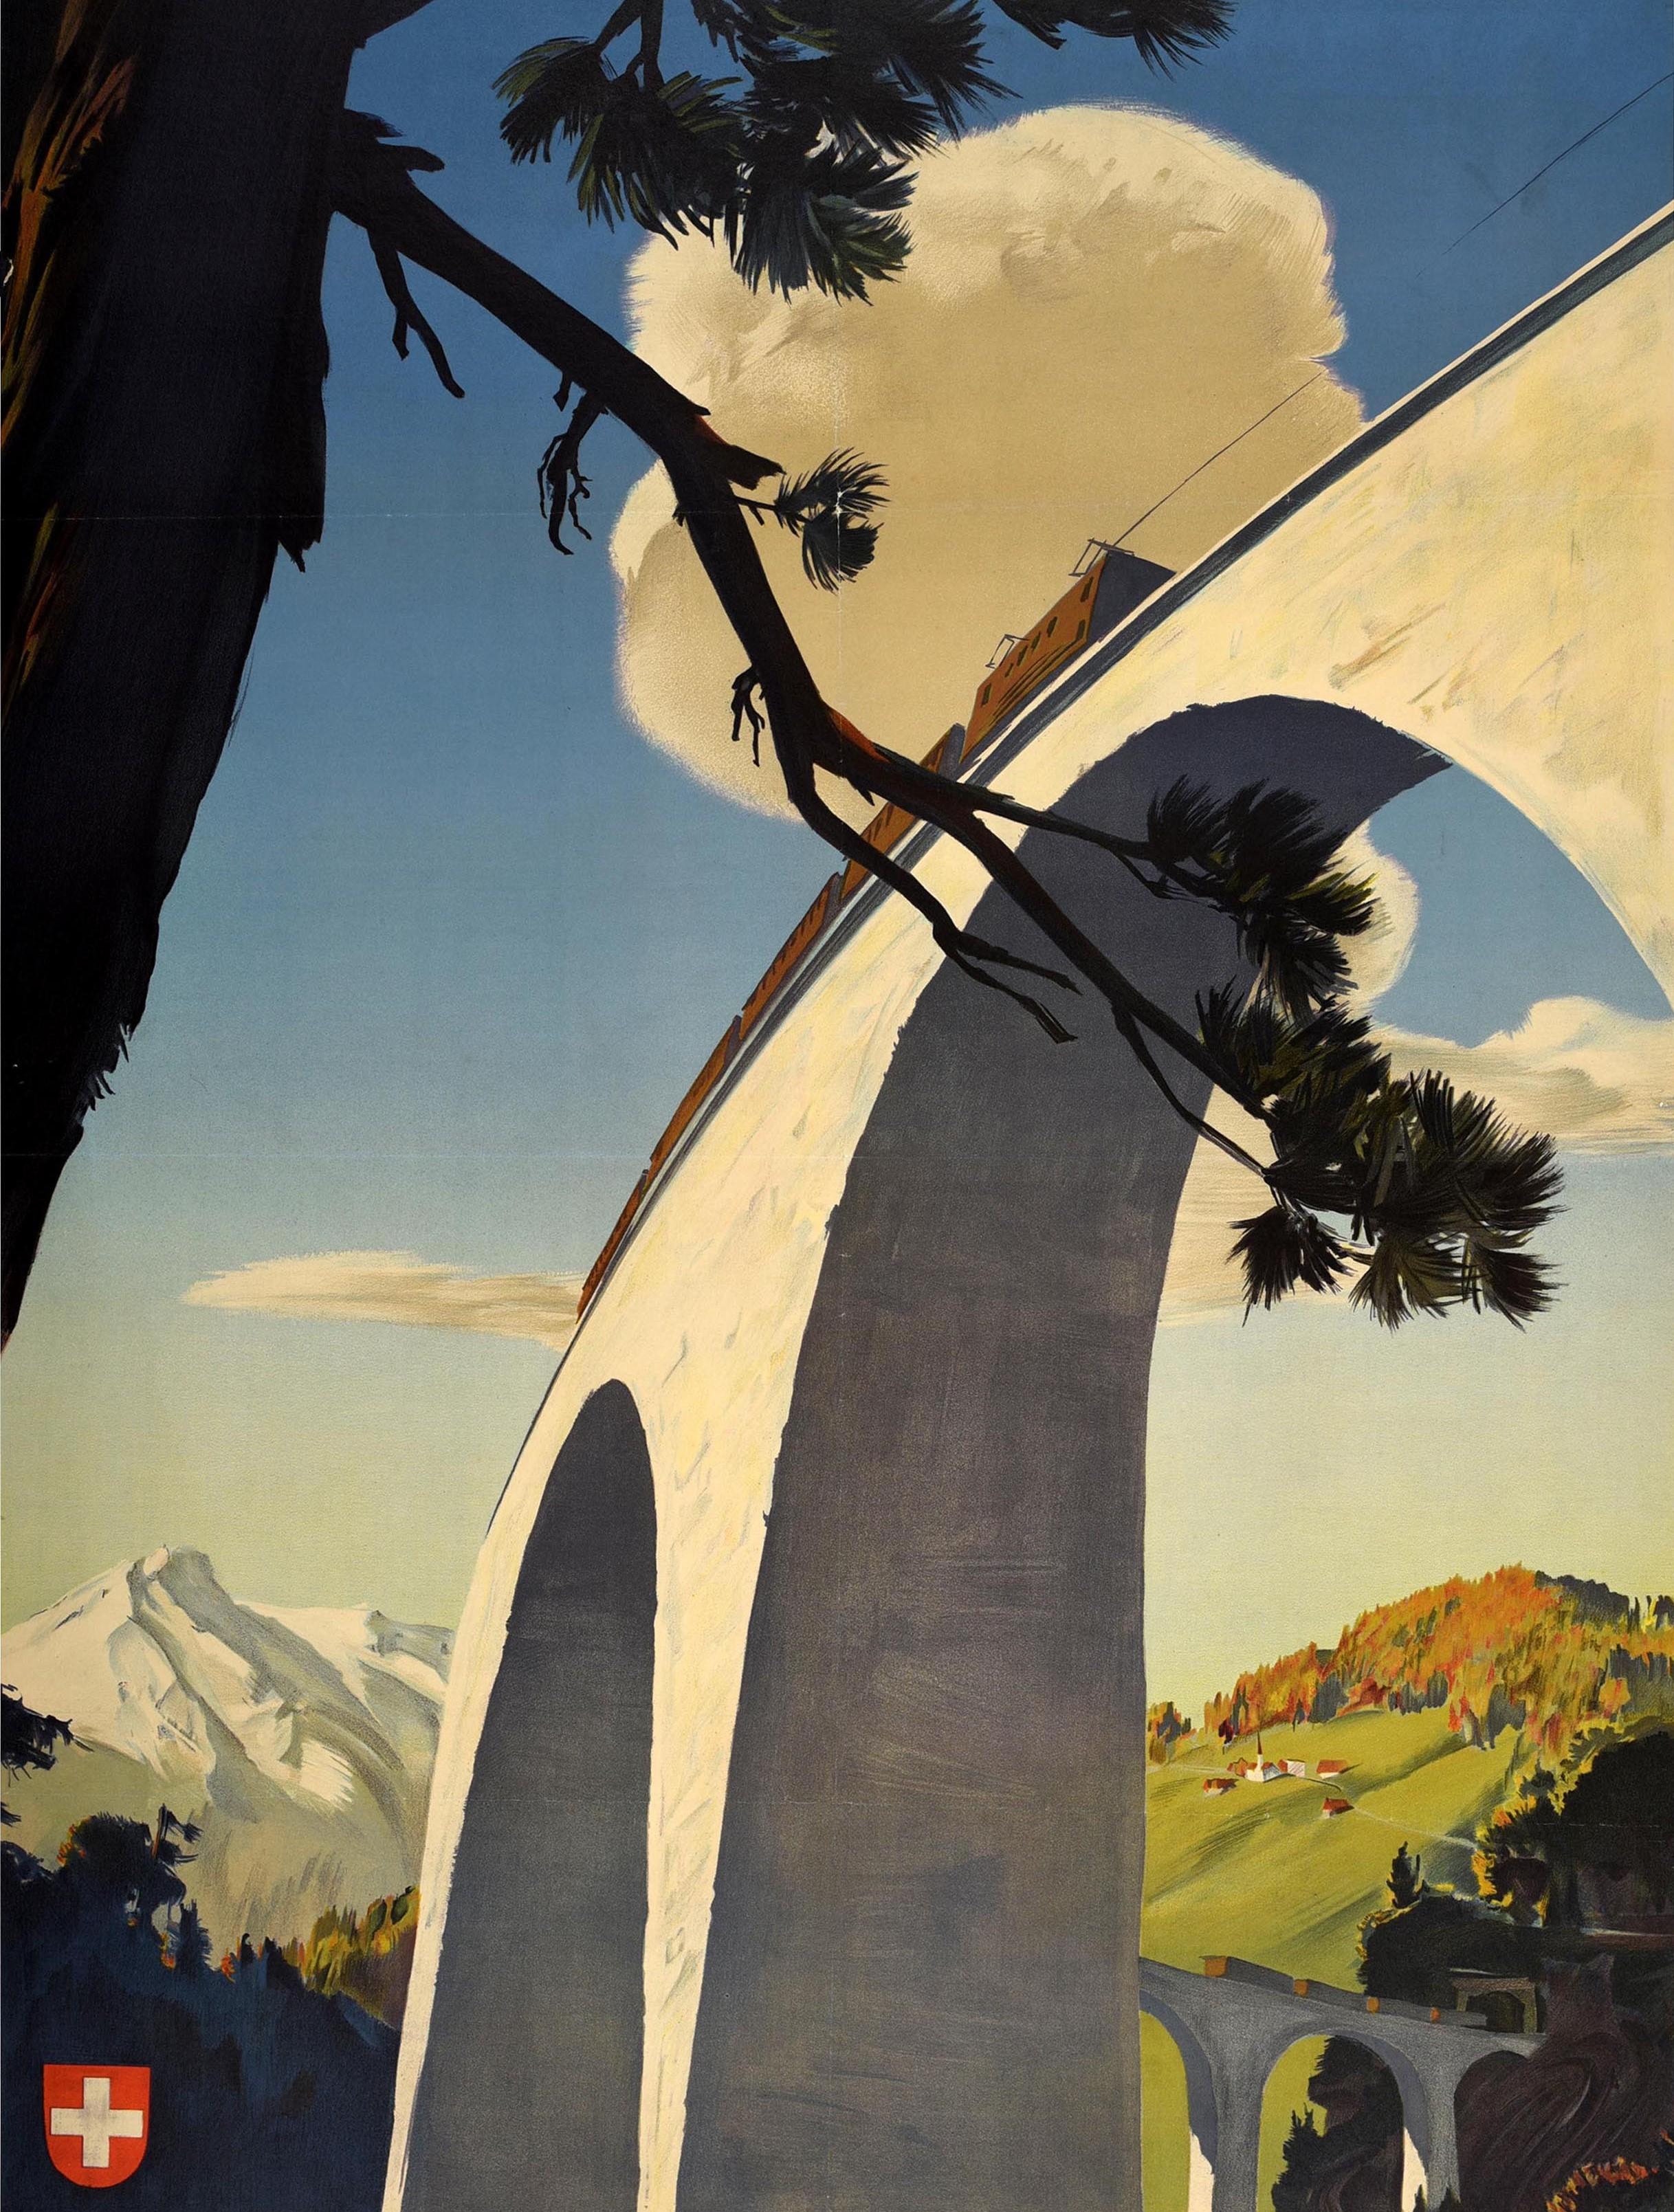 Mid-20th Century Original Vintage Travel Poster Vacances En Suisse Switzerland Holiday Swiss Alps